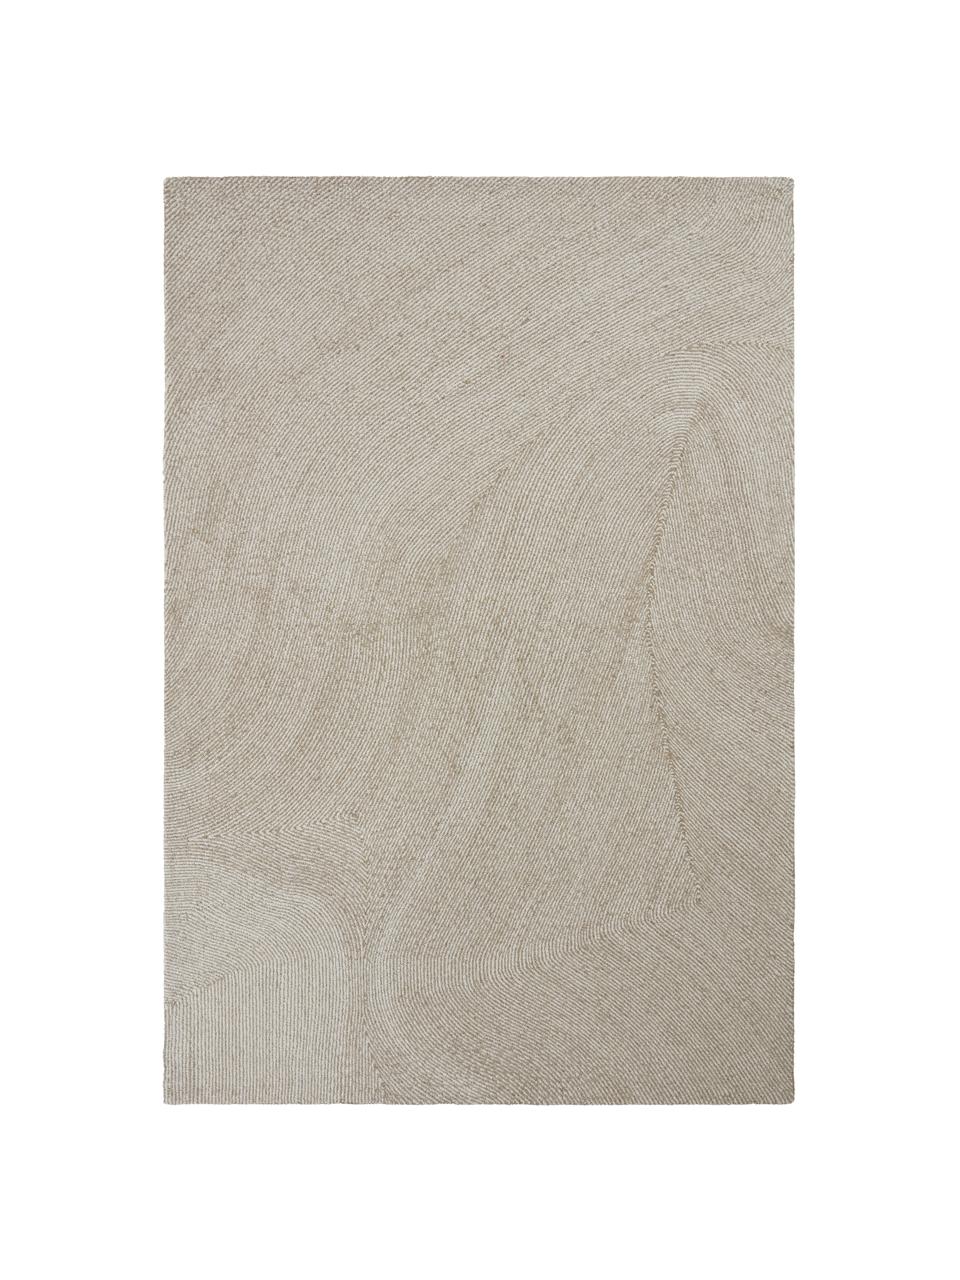 Grote handgeweven vloerkleed Canyon met golfachtig patroon in beige/wit, 51% polyester, 49% wol, Beige, B 200 x L 300 cm (maat L)